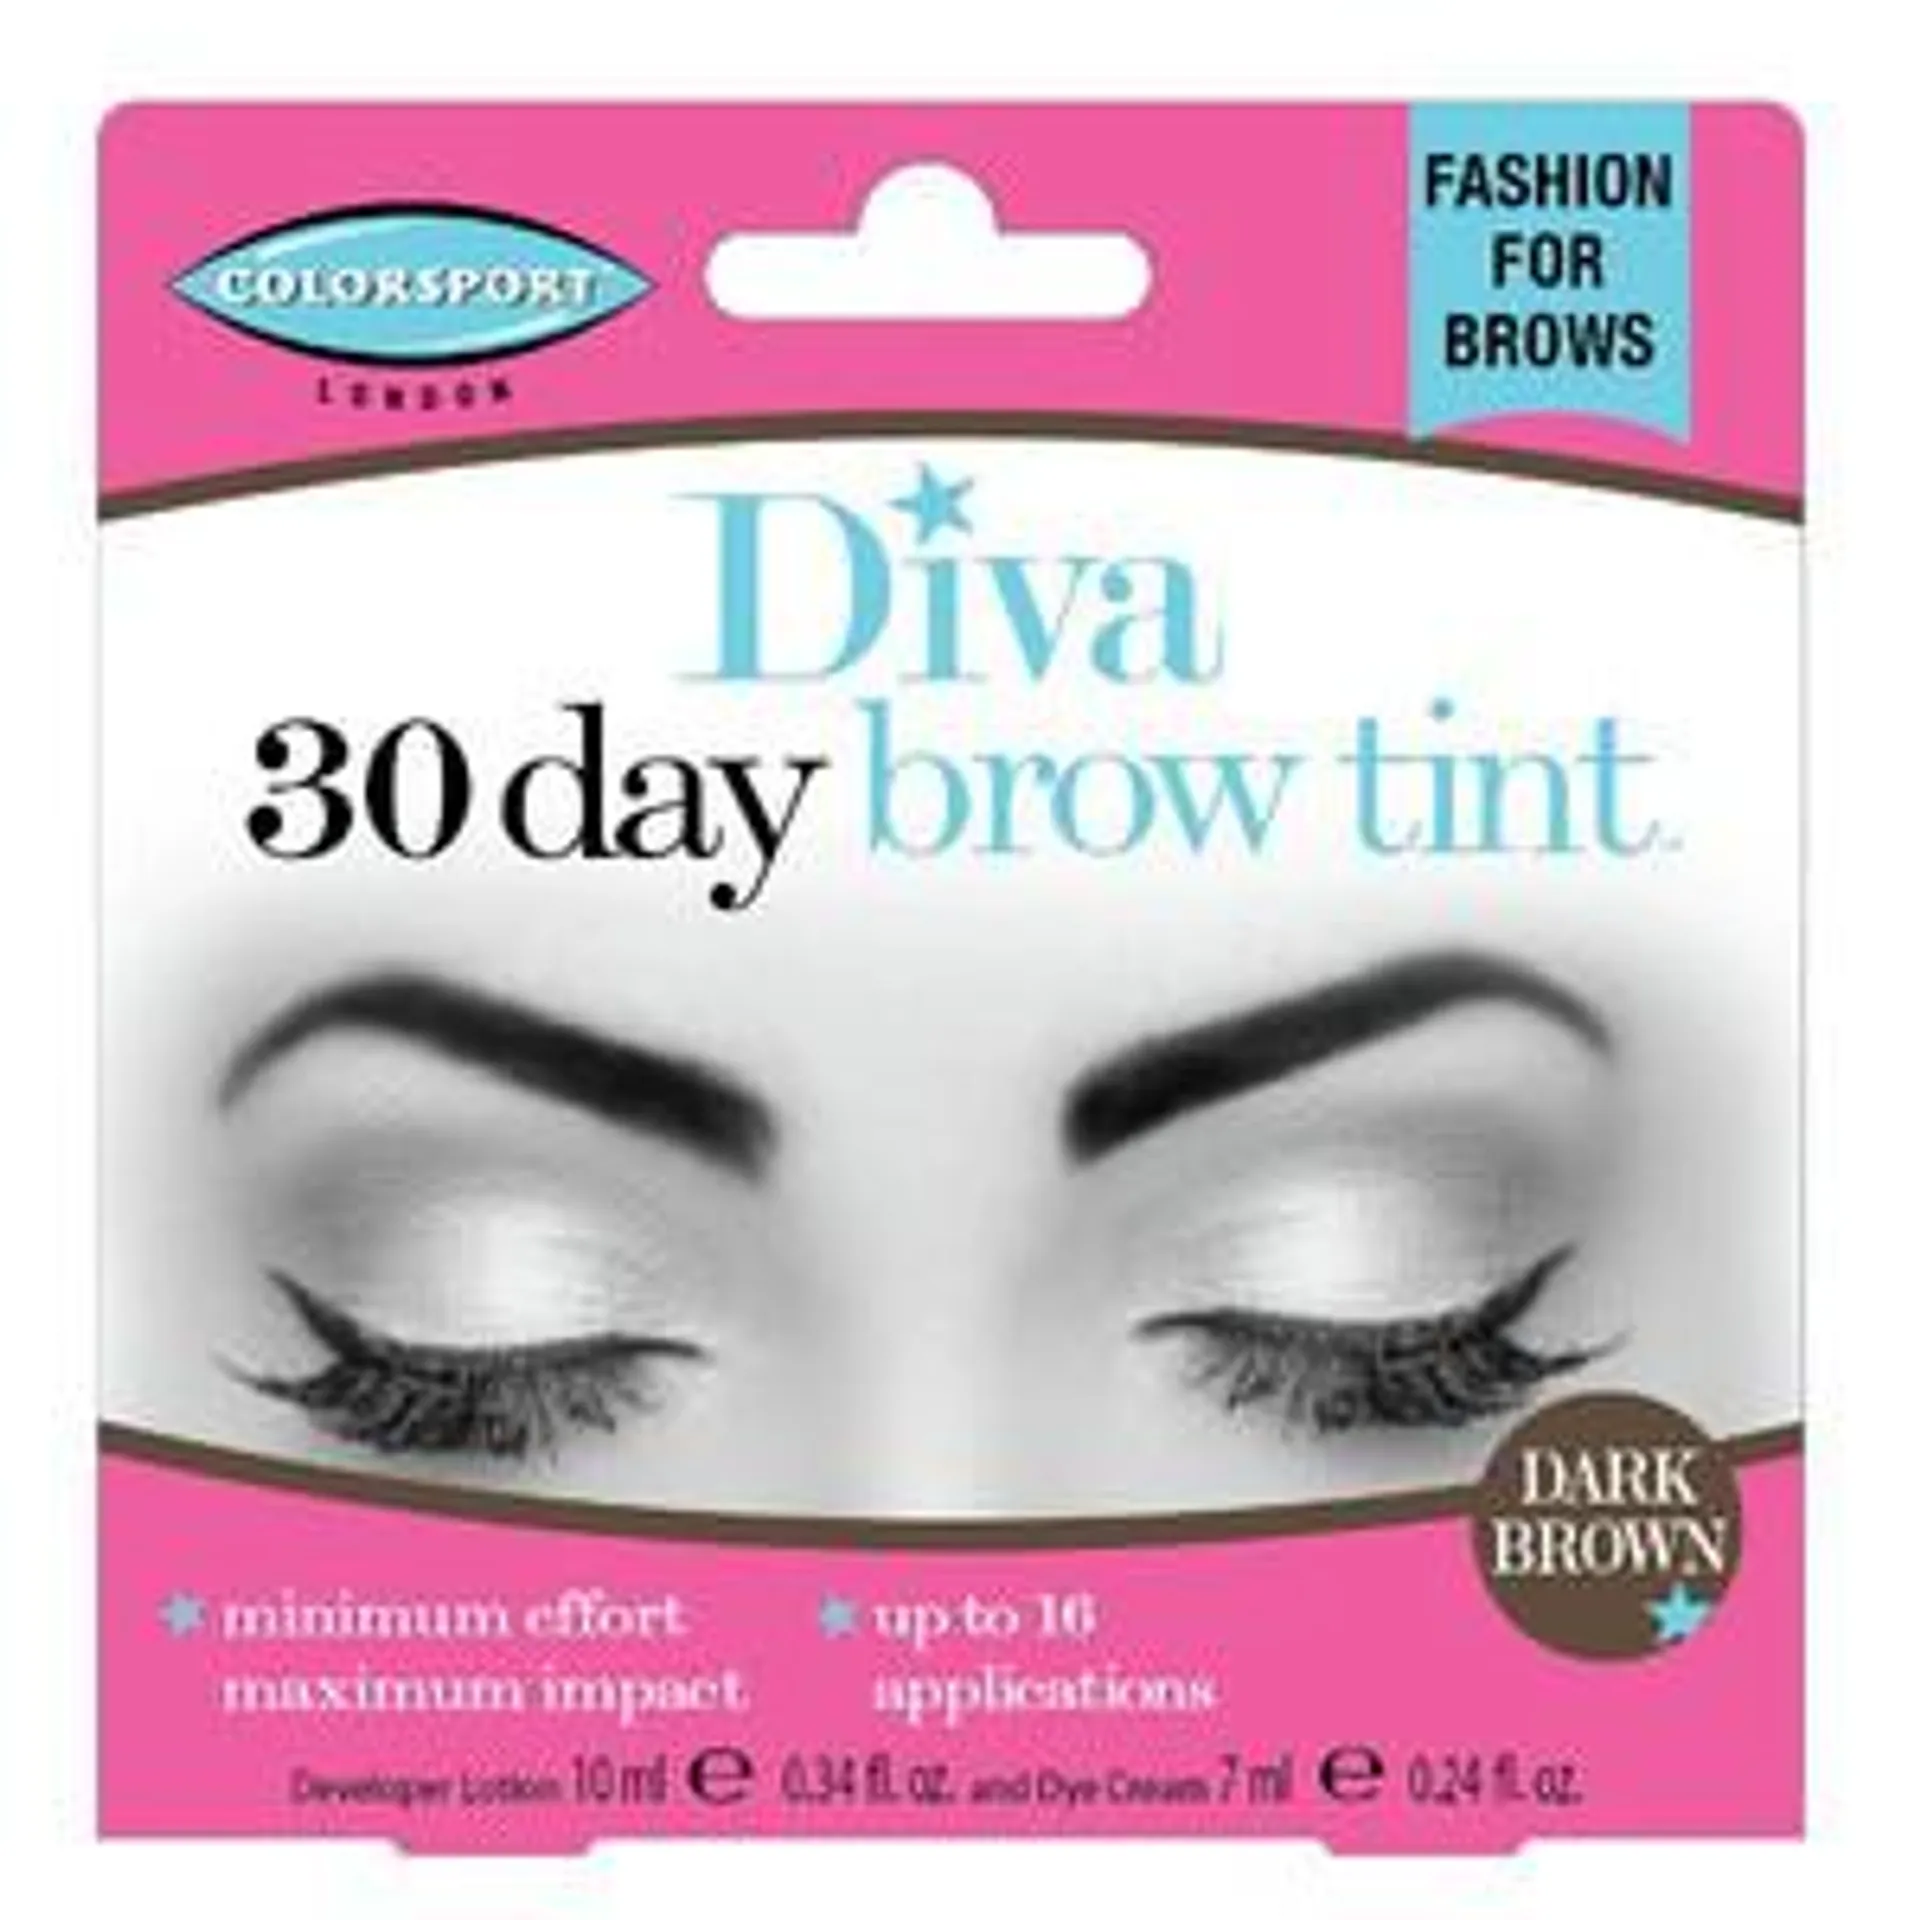 Colorsport Diva 30 Day Brow Tint Dark Brown